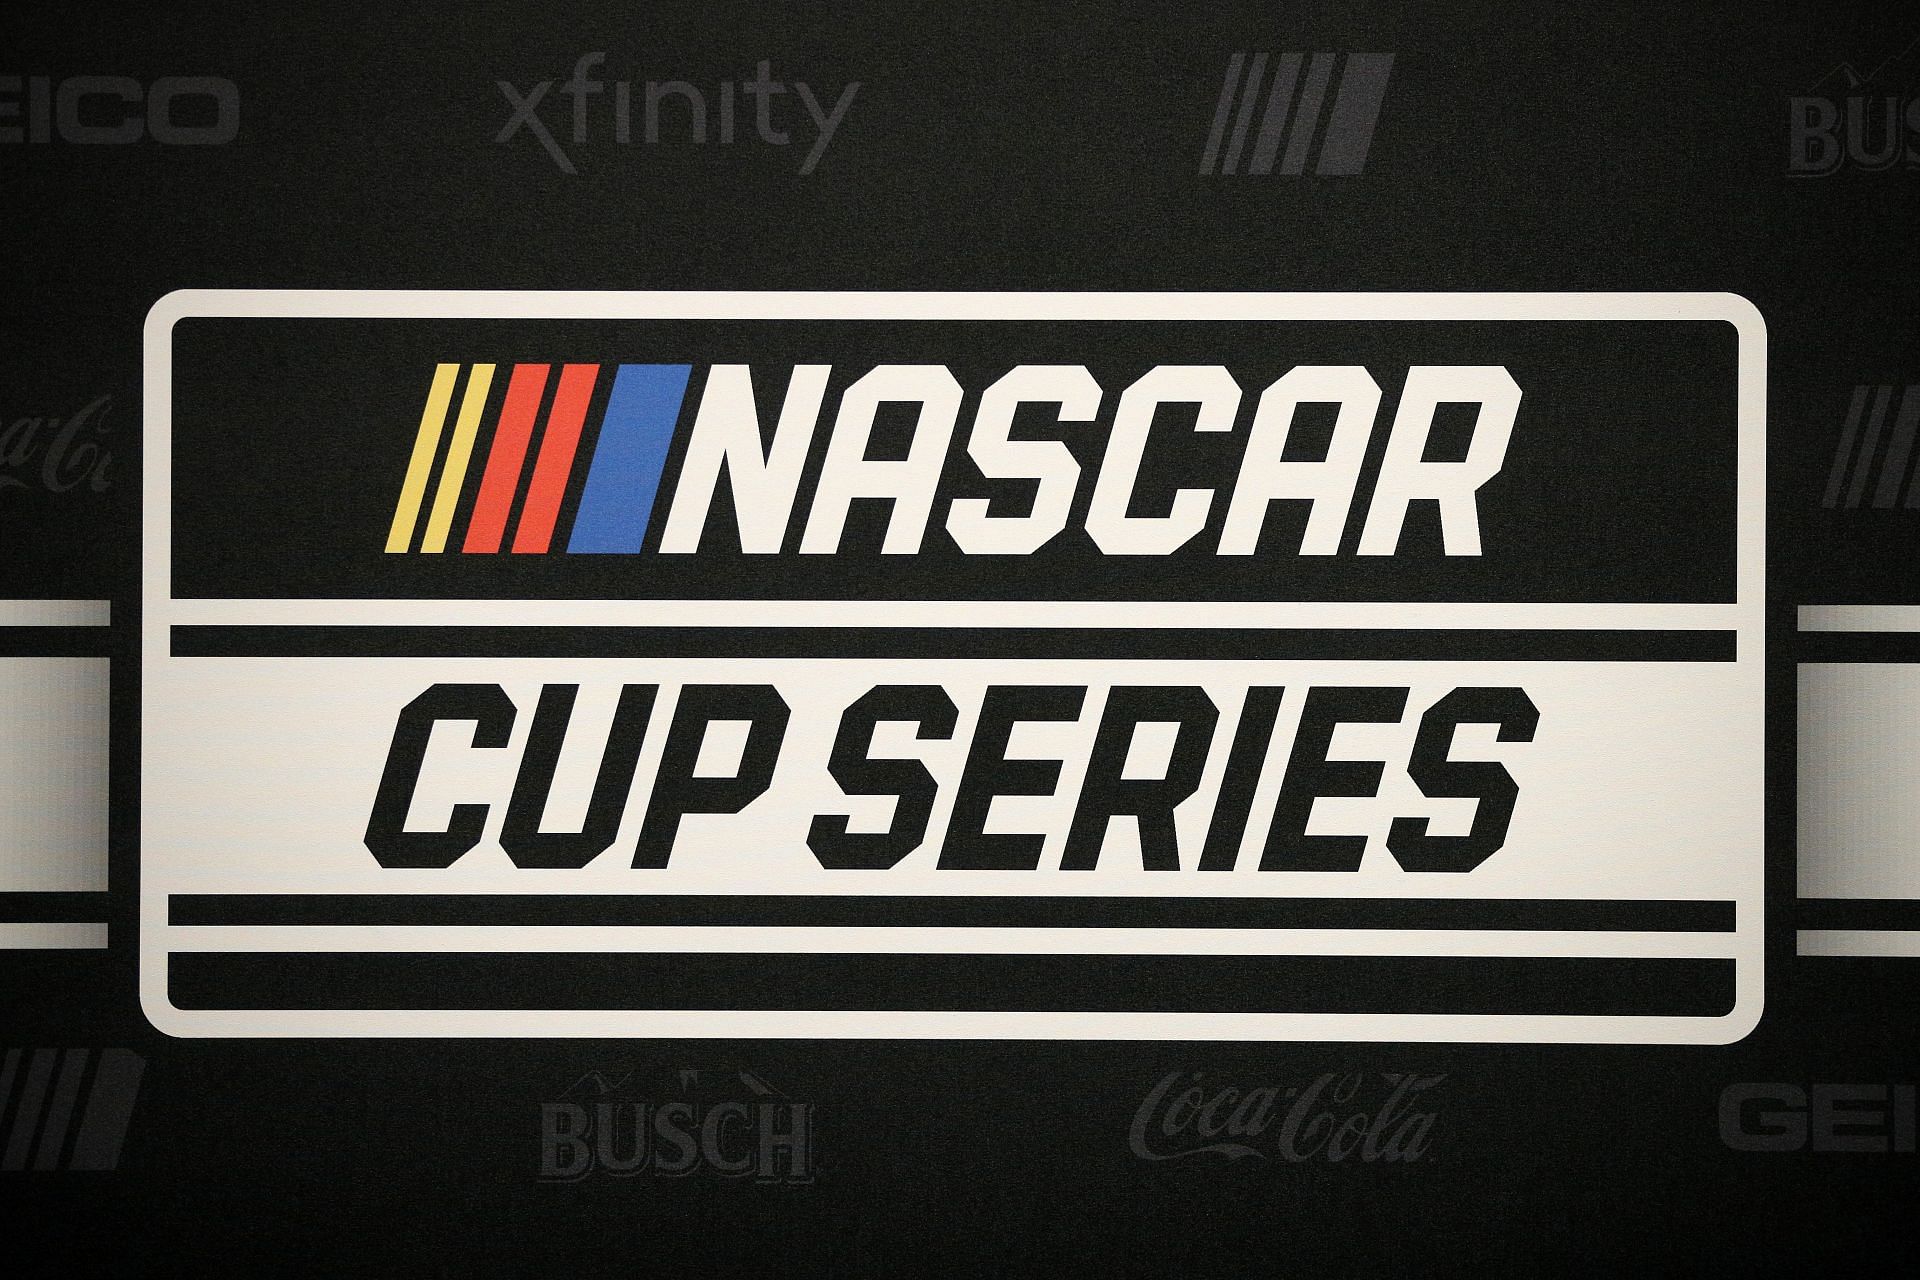 NASCAR Cup Series kicks off at Daytona in February